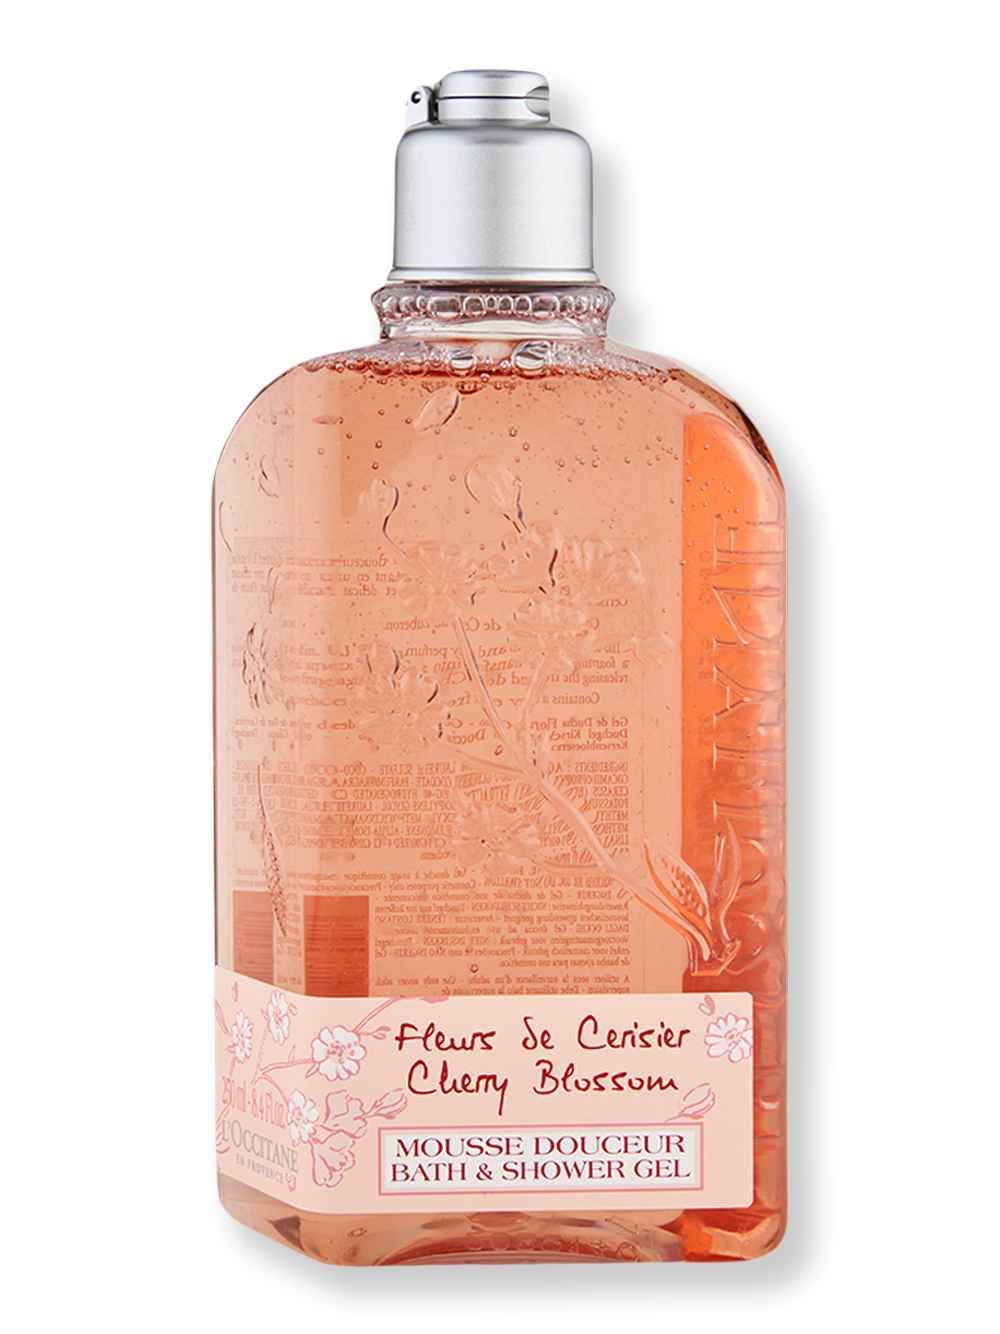 L'Occitane Cherry Blossom Bath & Shower Gel 250 ml.